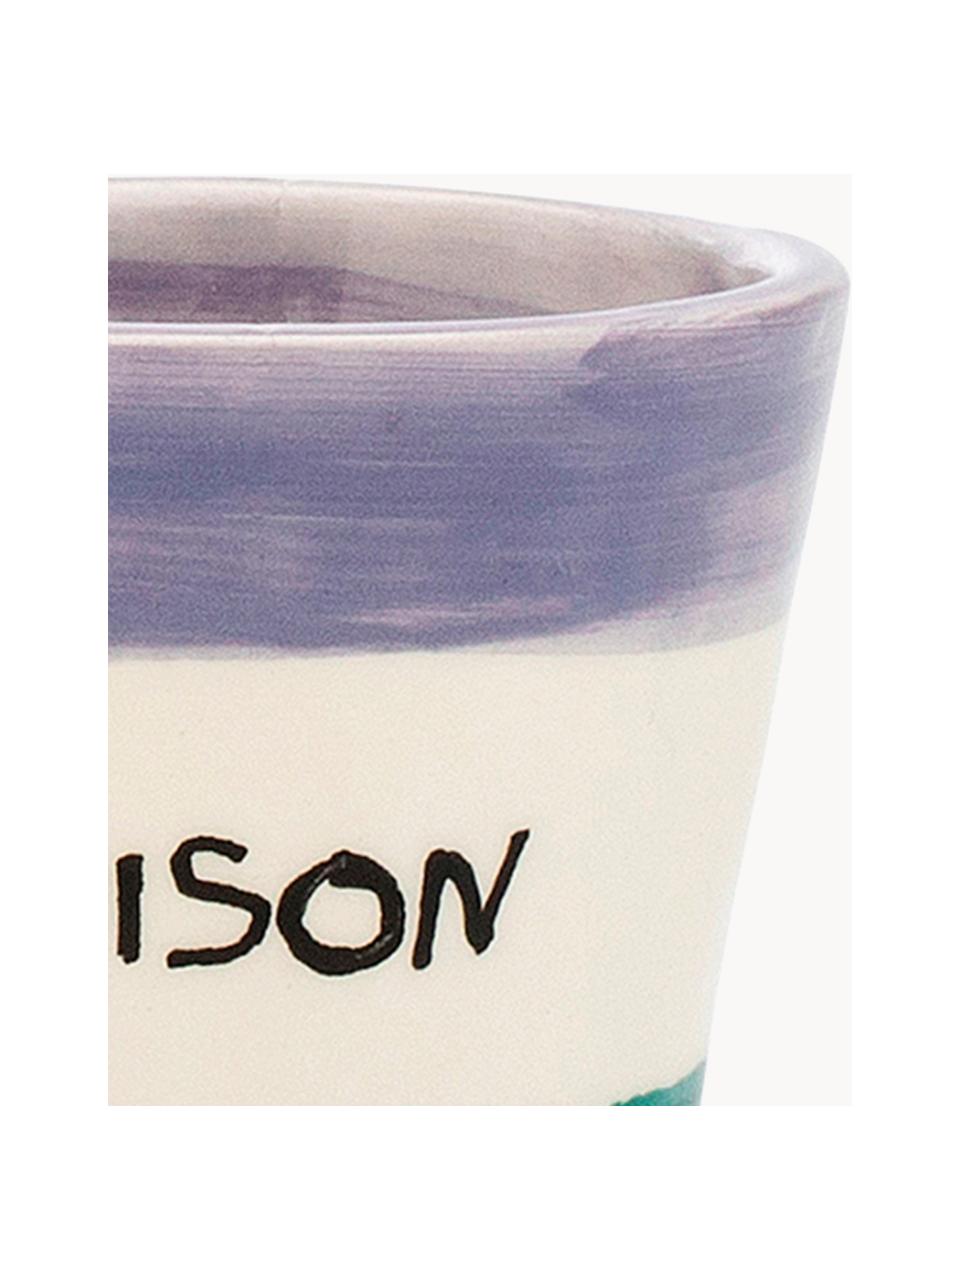 Handgefertigter Espressobecher Poison, 6 Stück, Keramik, Lavendel, Off White, Schwarz, Petrol, Ø 7 x H 6 cm, 80 ml